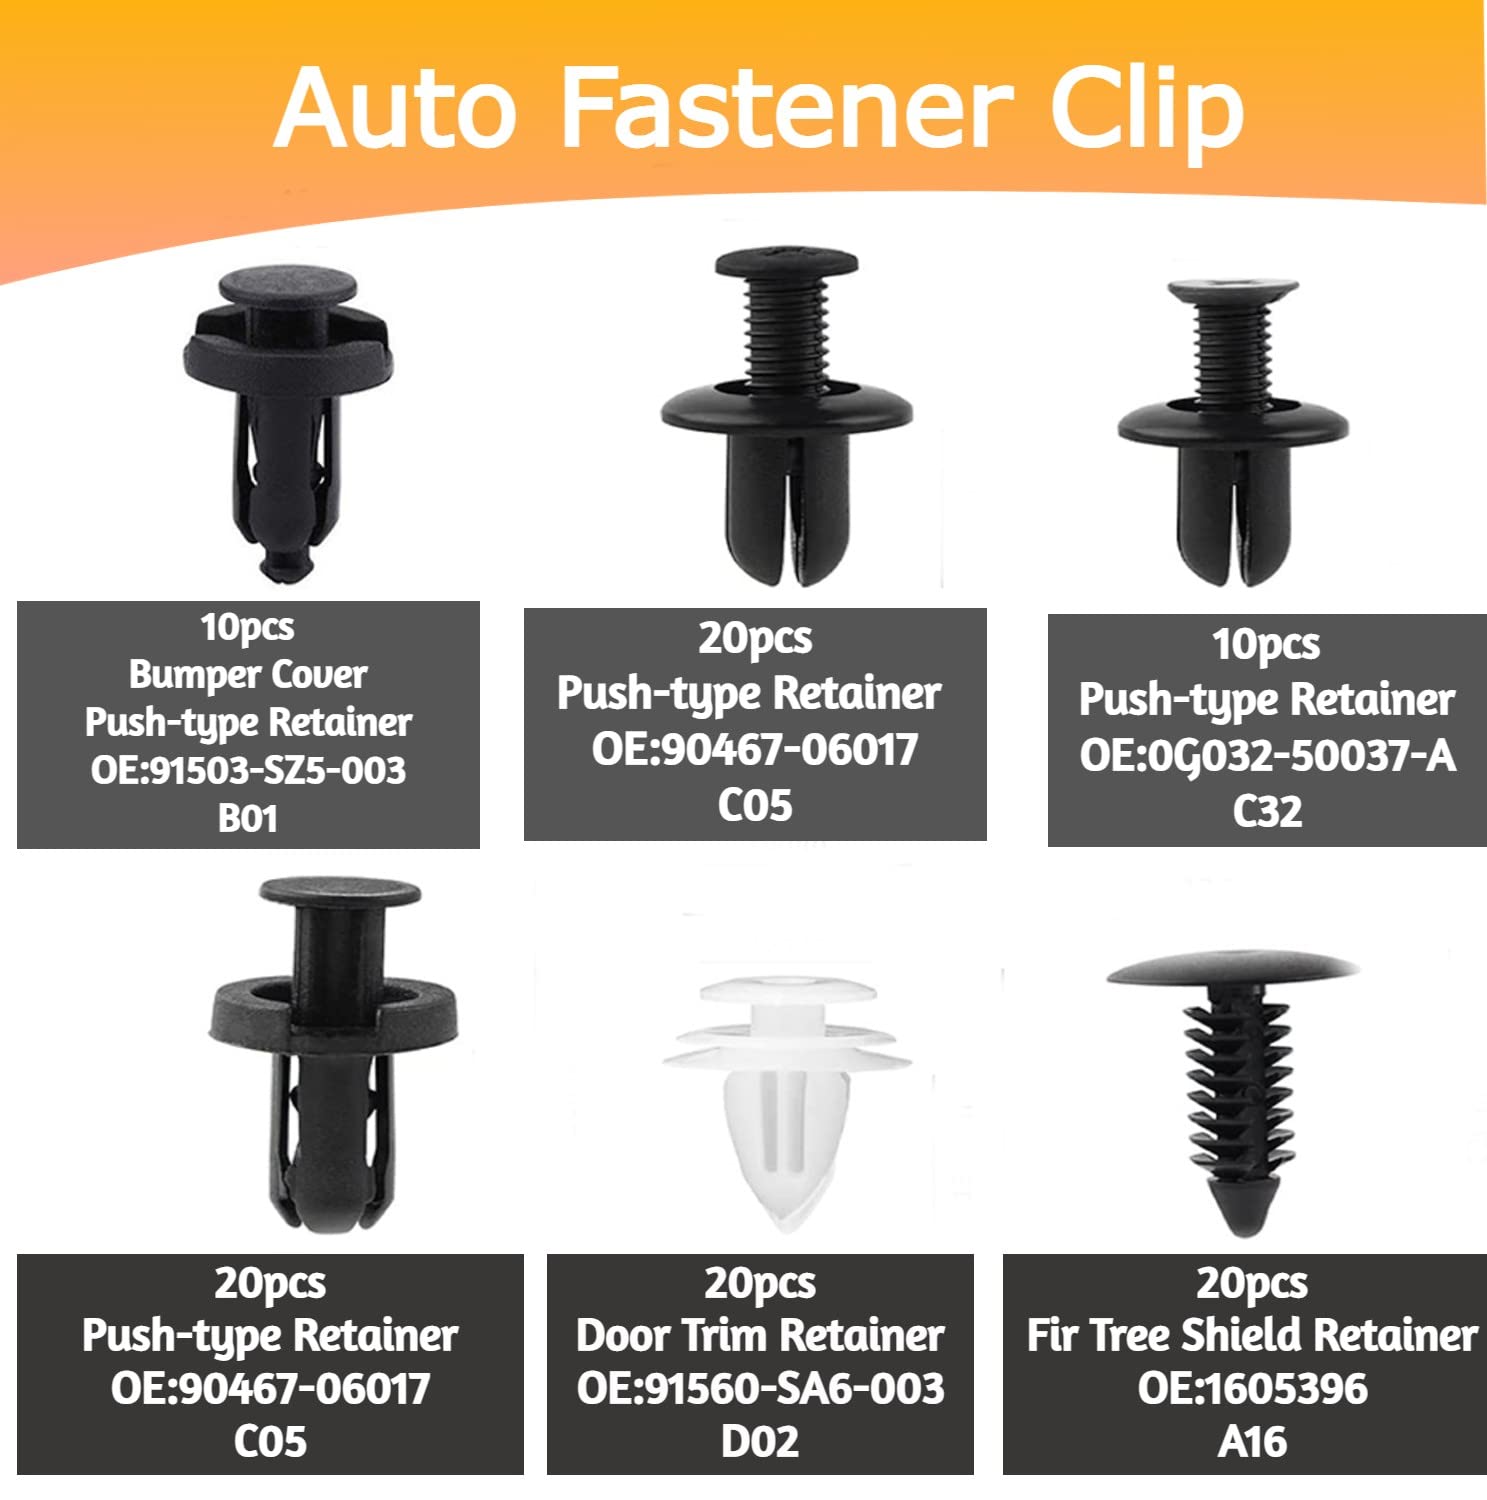 100 pcs 6 Size Car Fastener Bumper Clip,Rivets Auto Retainer Push Fastener Fender Door Clips - Replacement Trim Removal Tool for cars. (100 PCS BUMPER CLIPS)